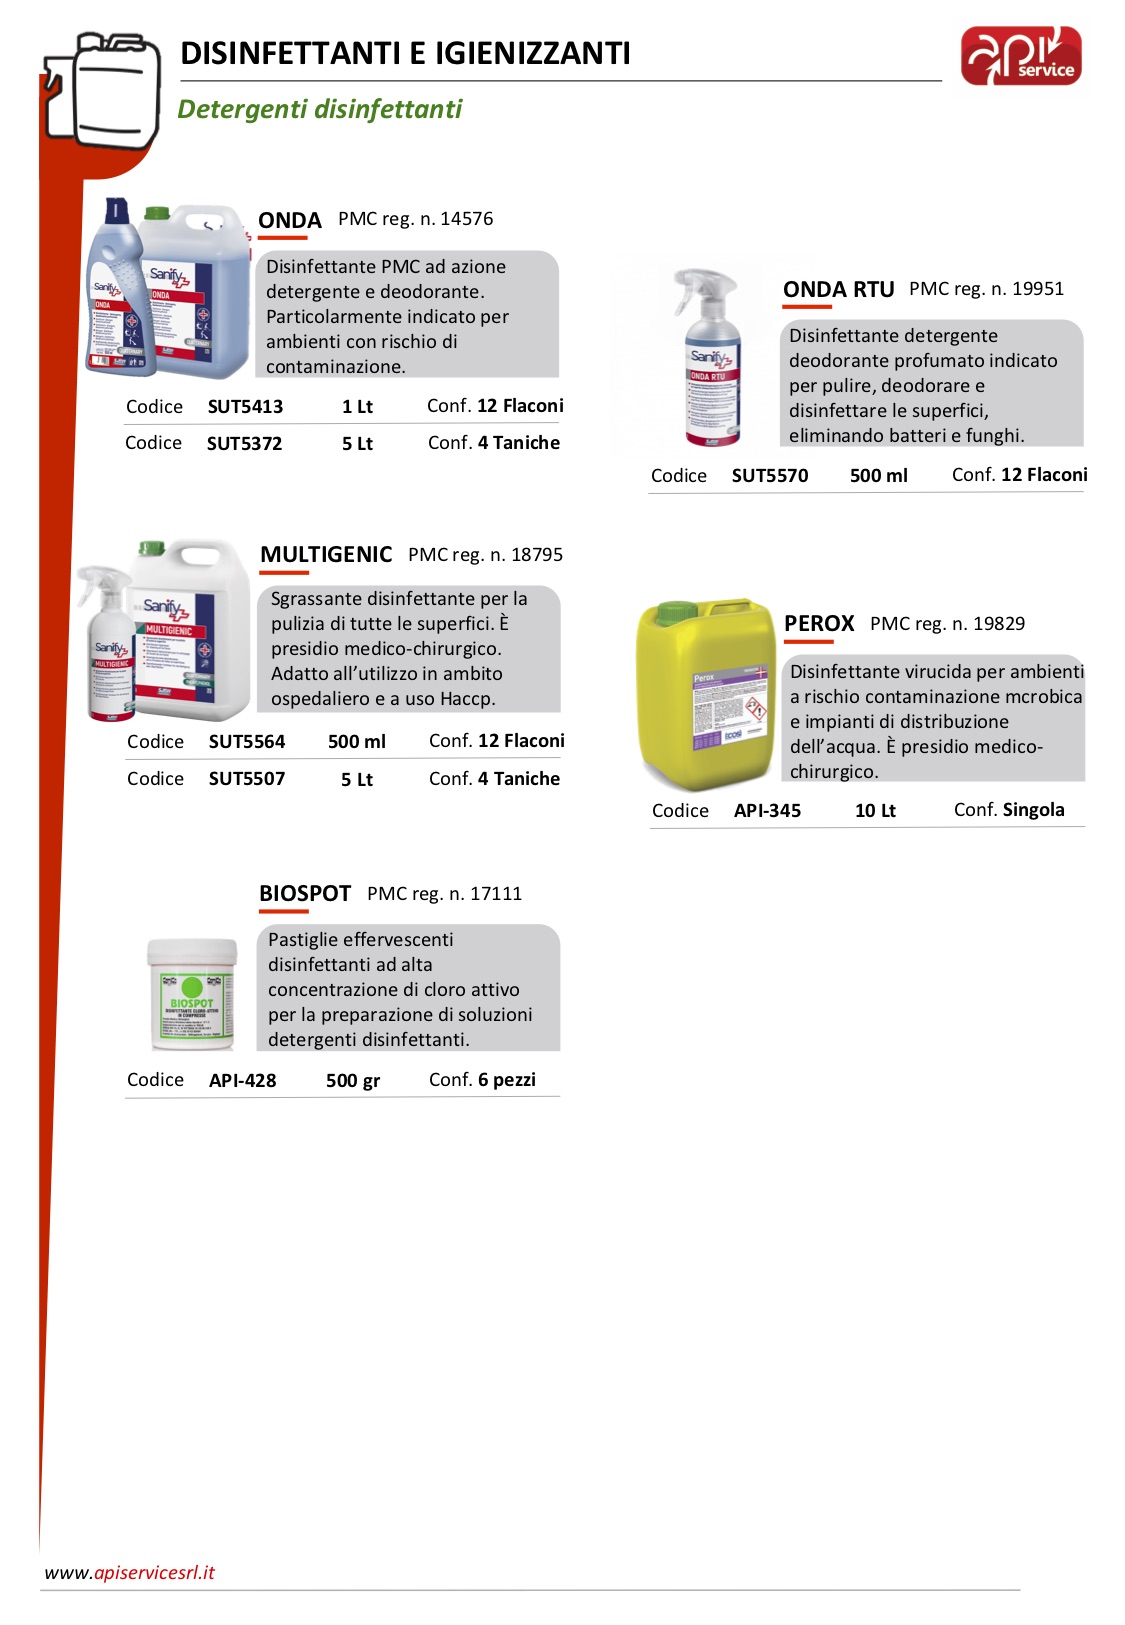 Detergenti-disinfettanti-biocidi-api-service-srl-milano-4.jpg